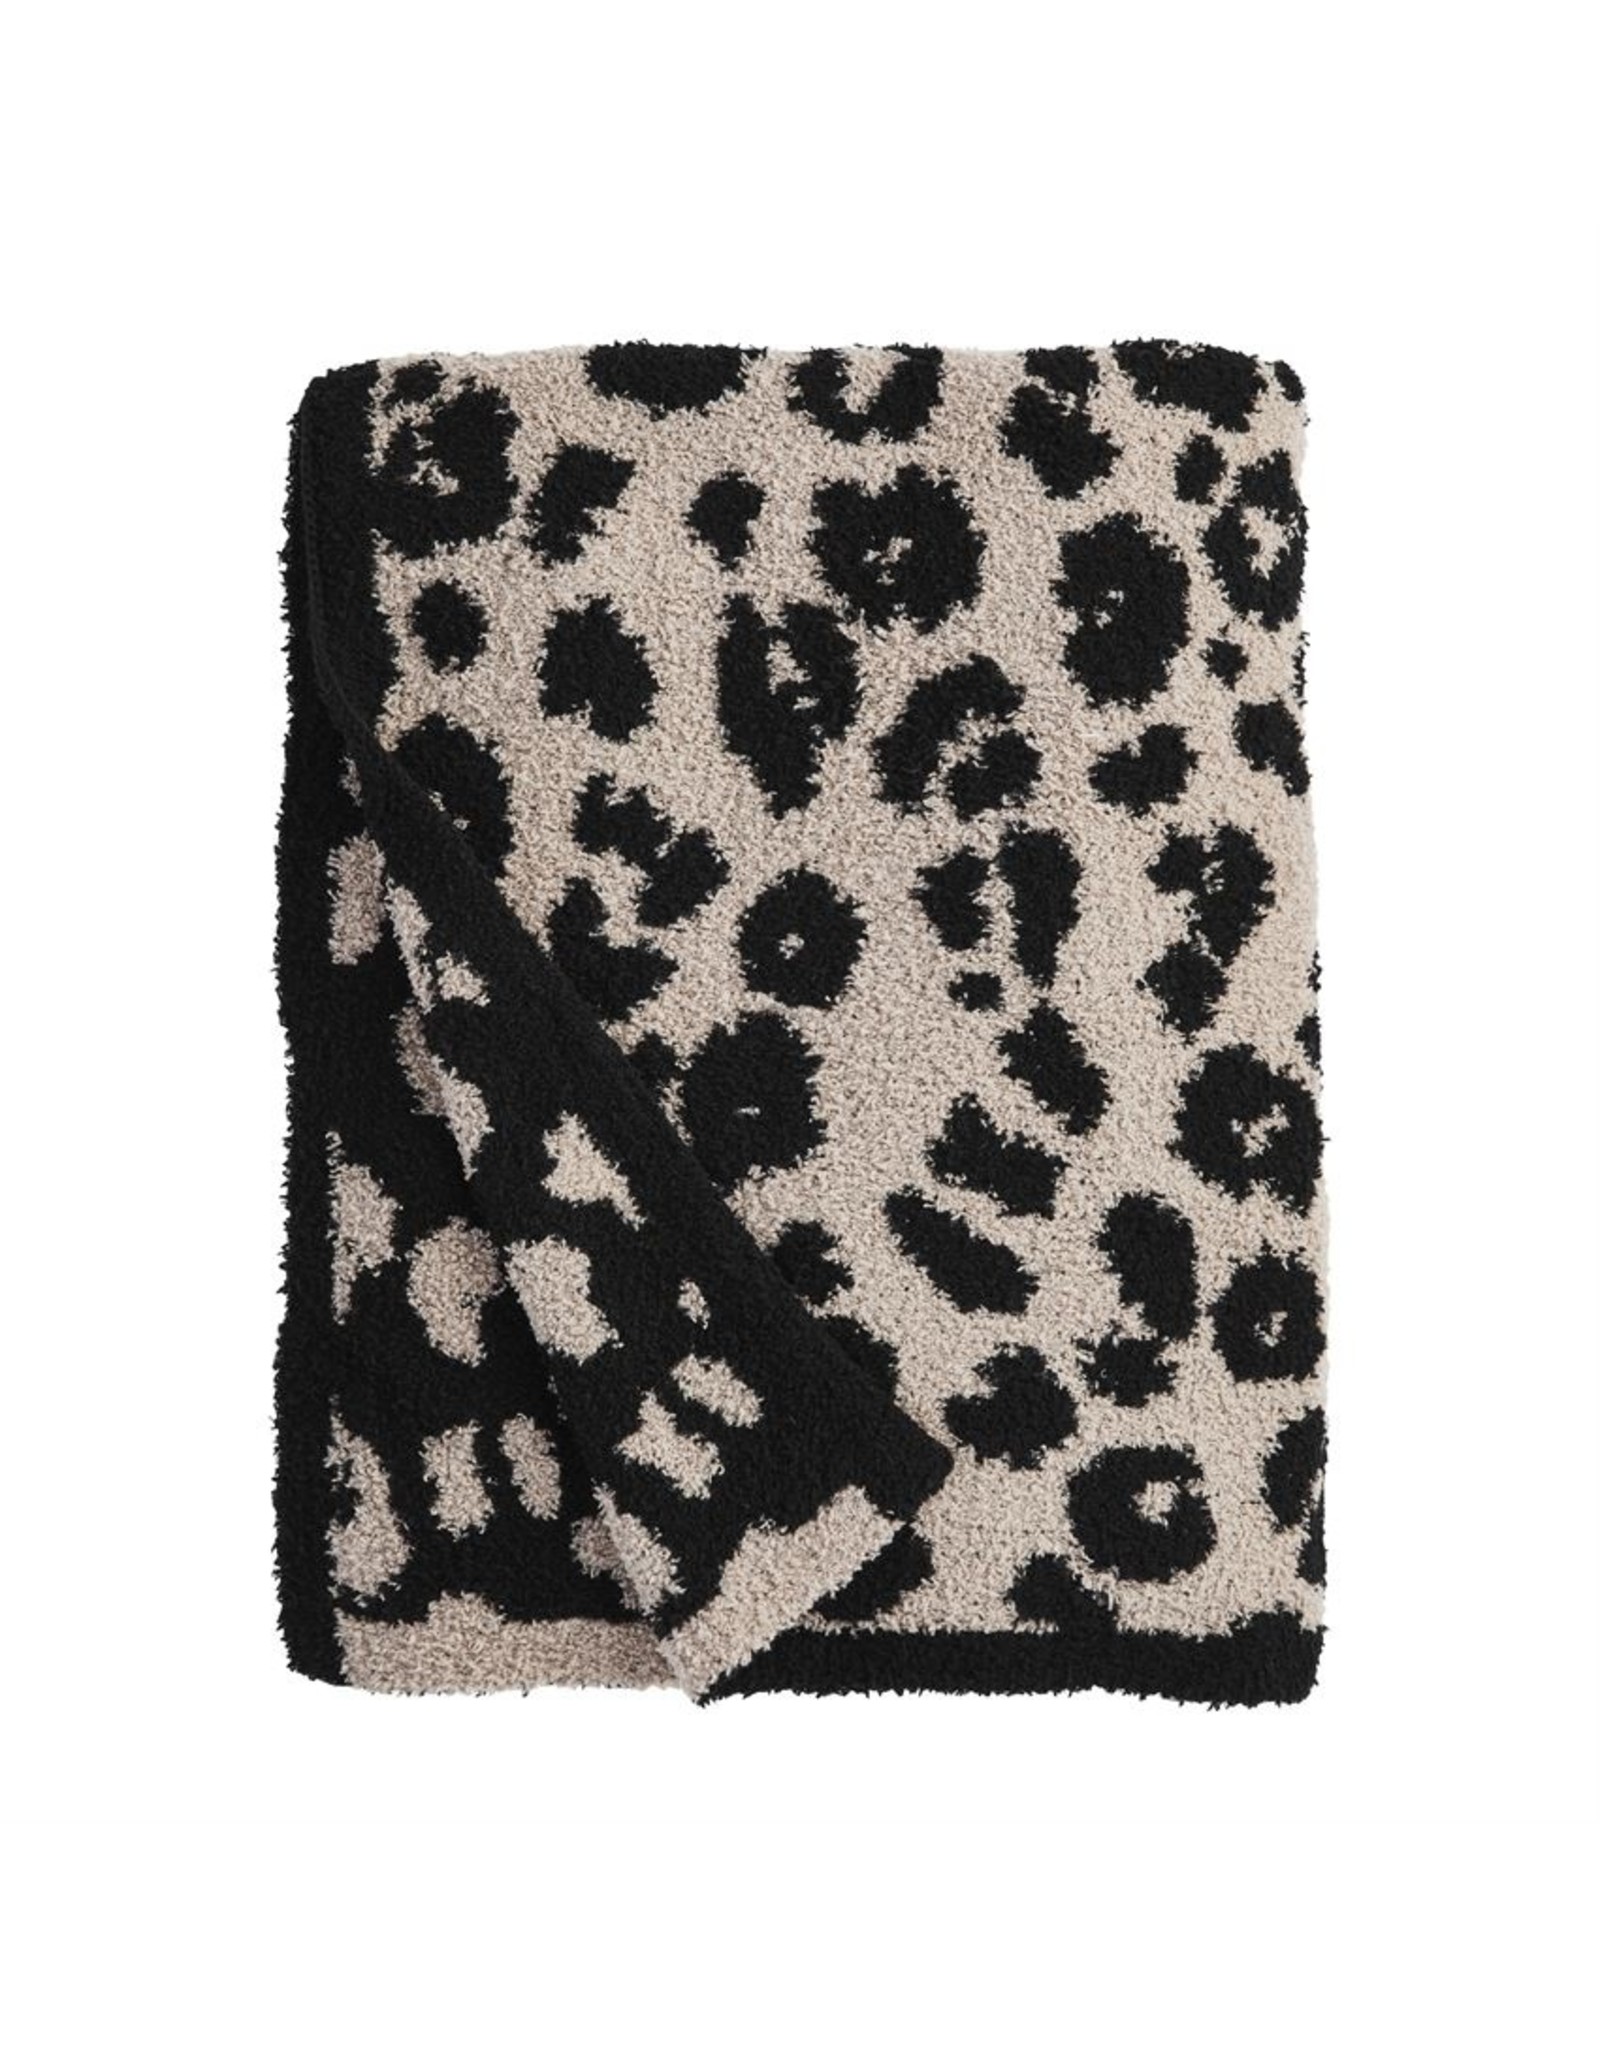 Mudpie Leopard Blanket - Tan